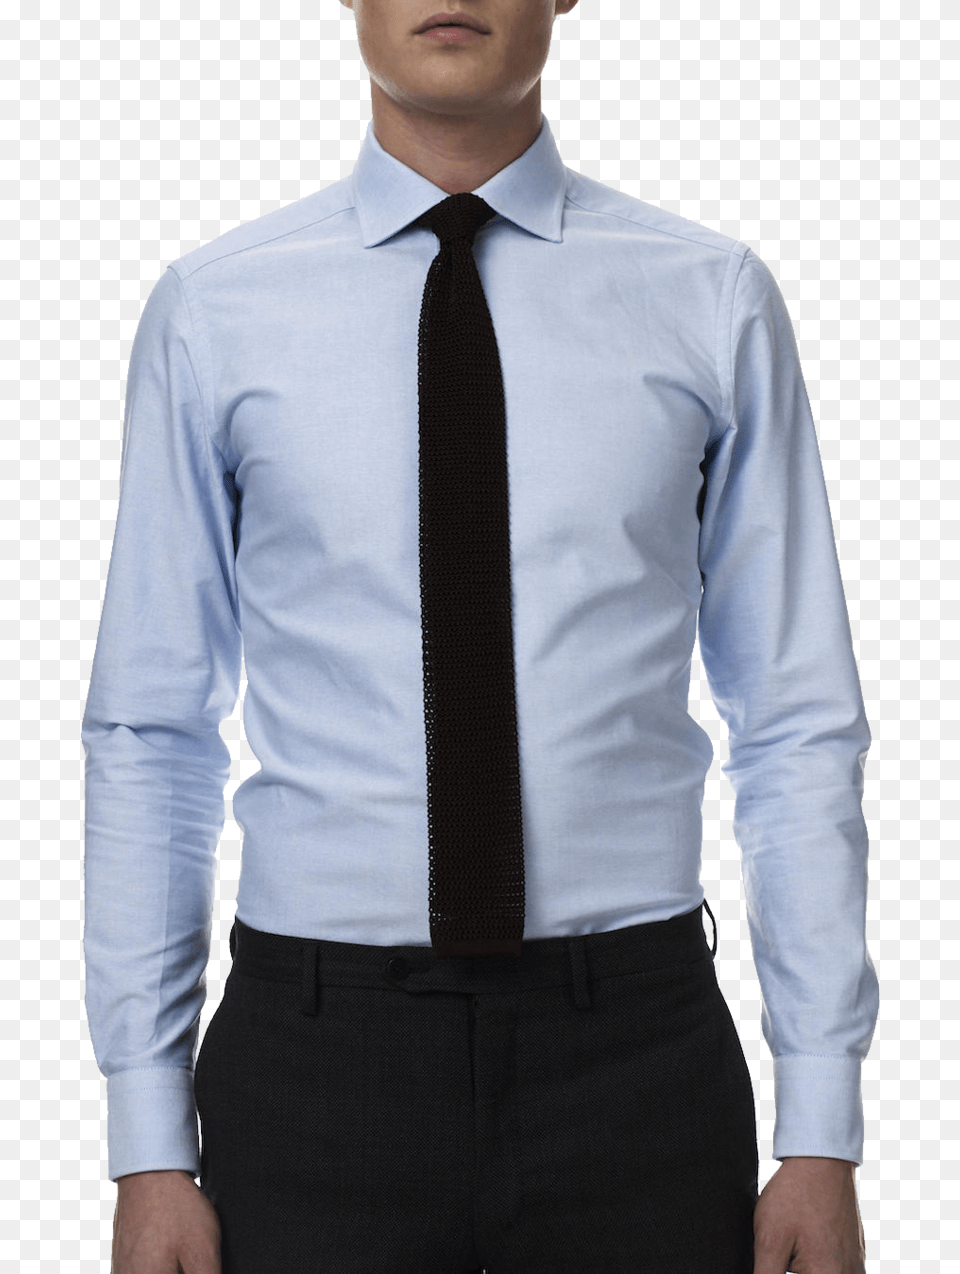 Best Llight Blue Dress Shirt Black Tie Blue Dress Shirt Black Tie, Accessories, Clothing, Dress Shirt, Formal Wear Free Png Download